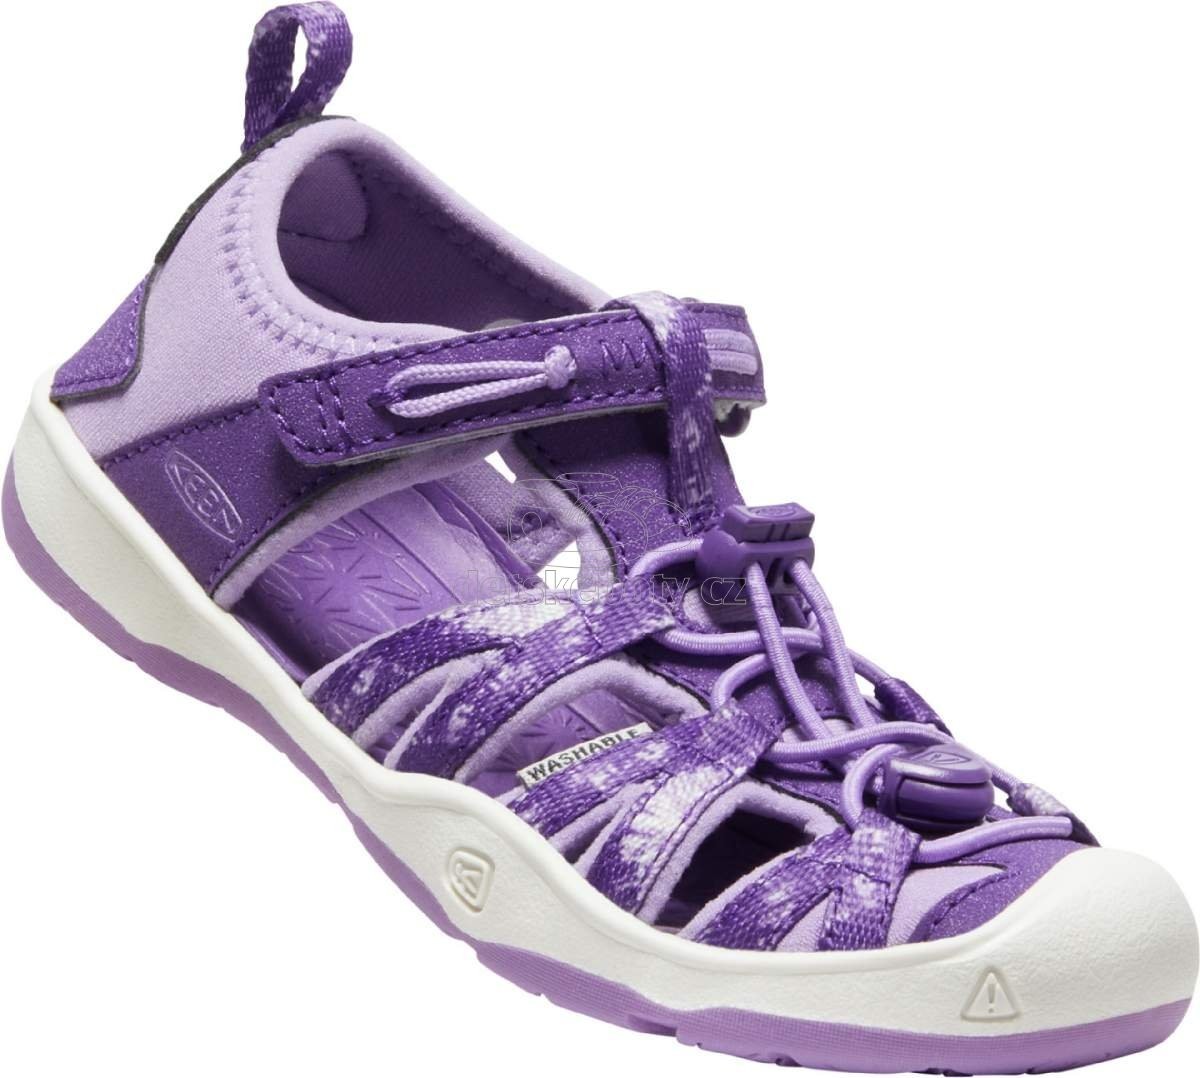 Dětské sandály Keen MOXIE SANDAL CHILDREN multi/english lavender Velikost: 25-26